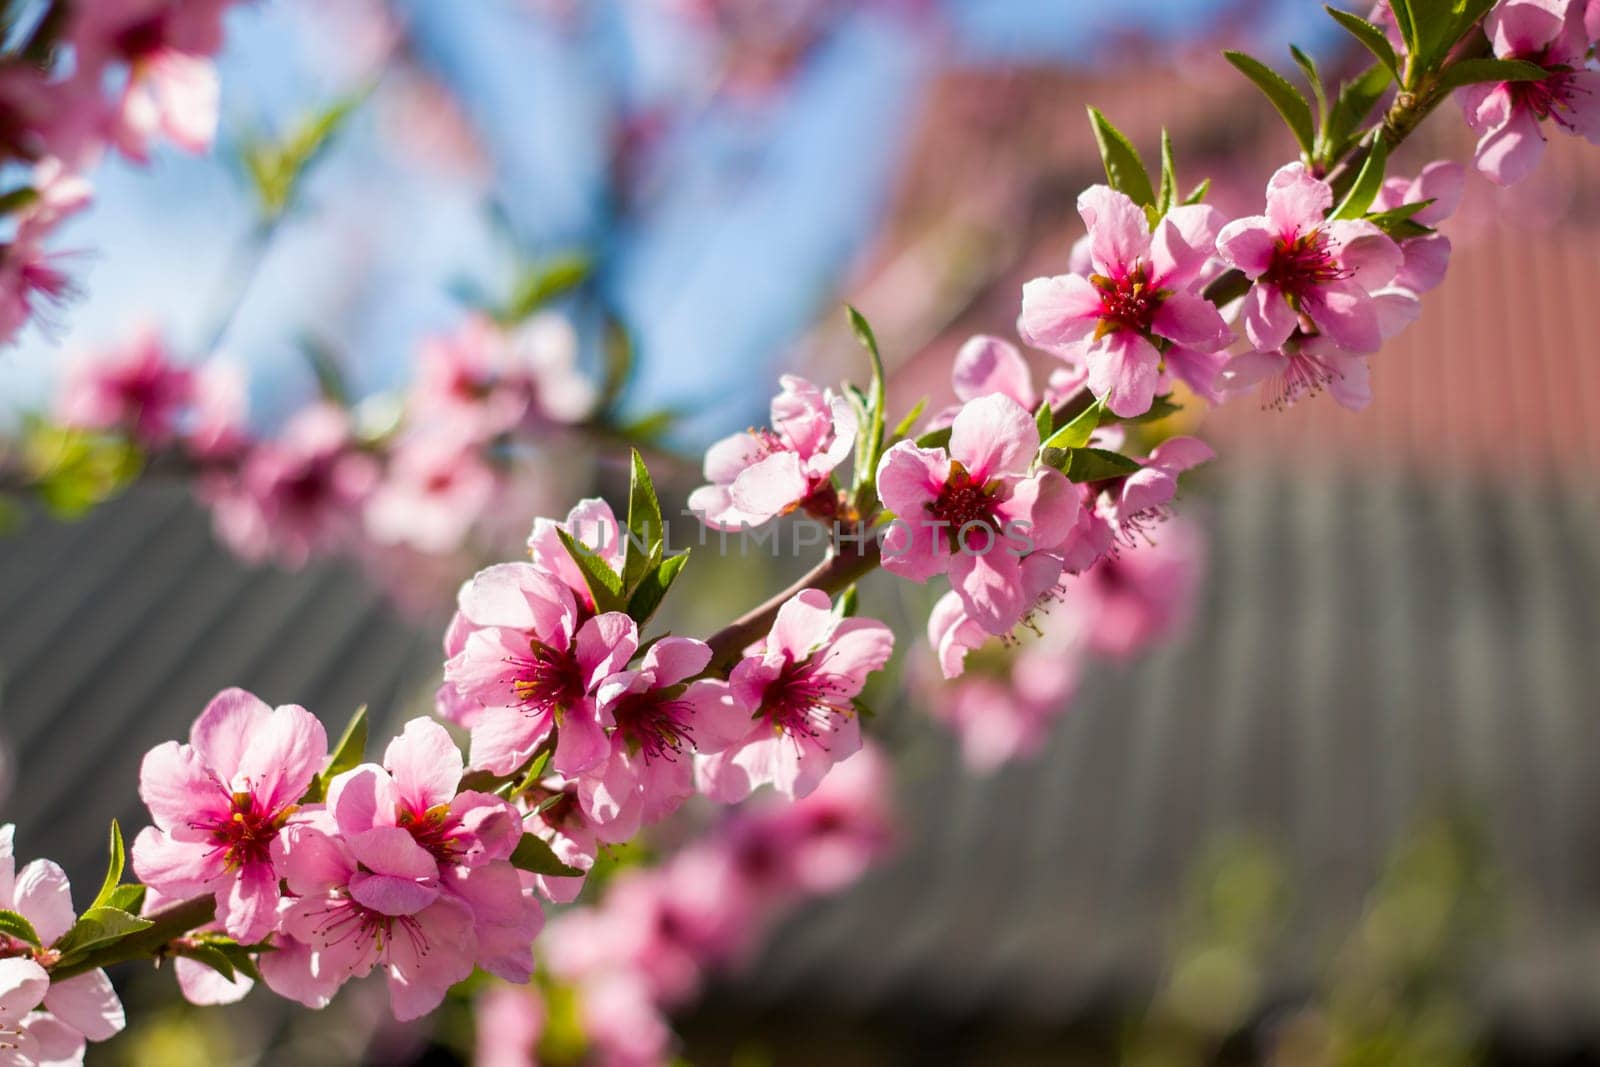 peach nectarine flowers on spring tree branch by romvo